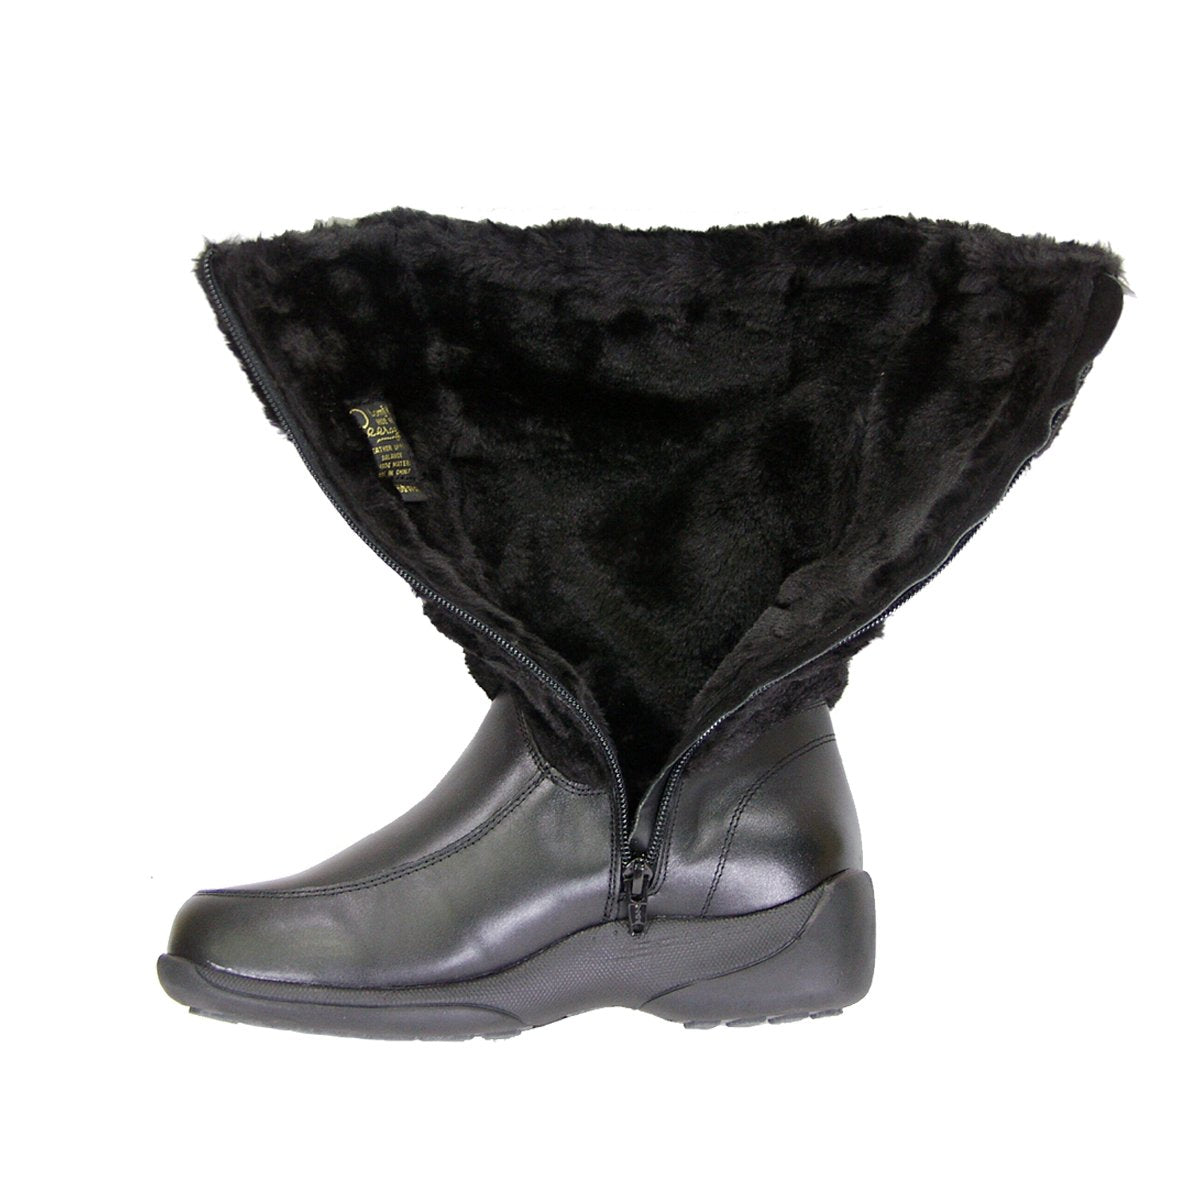 PEERAGE Bianca Women's Wide Width Leather Boots